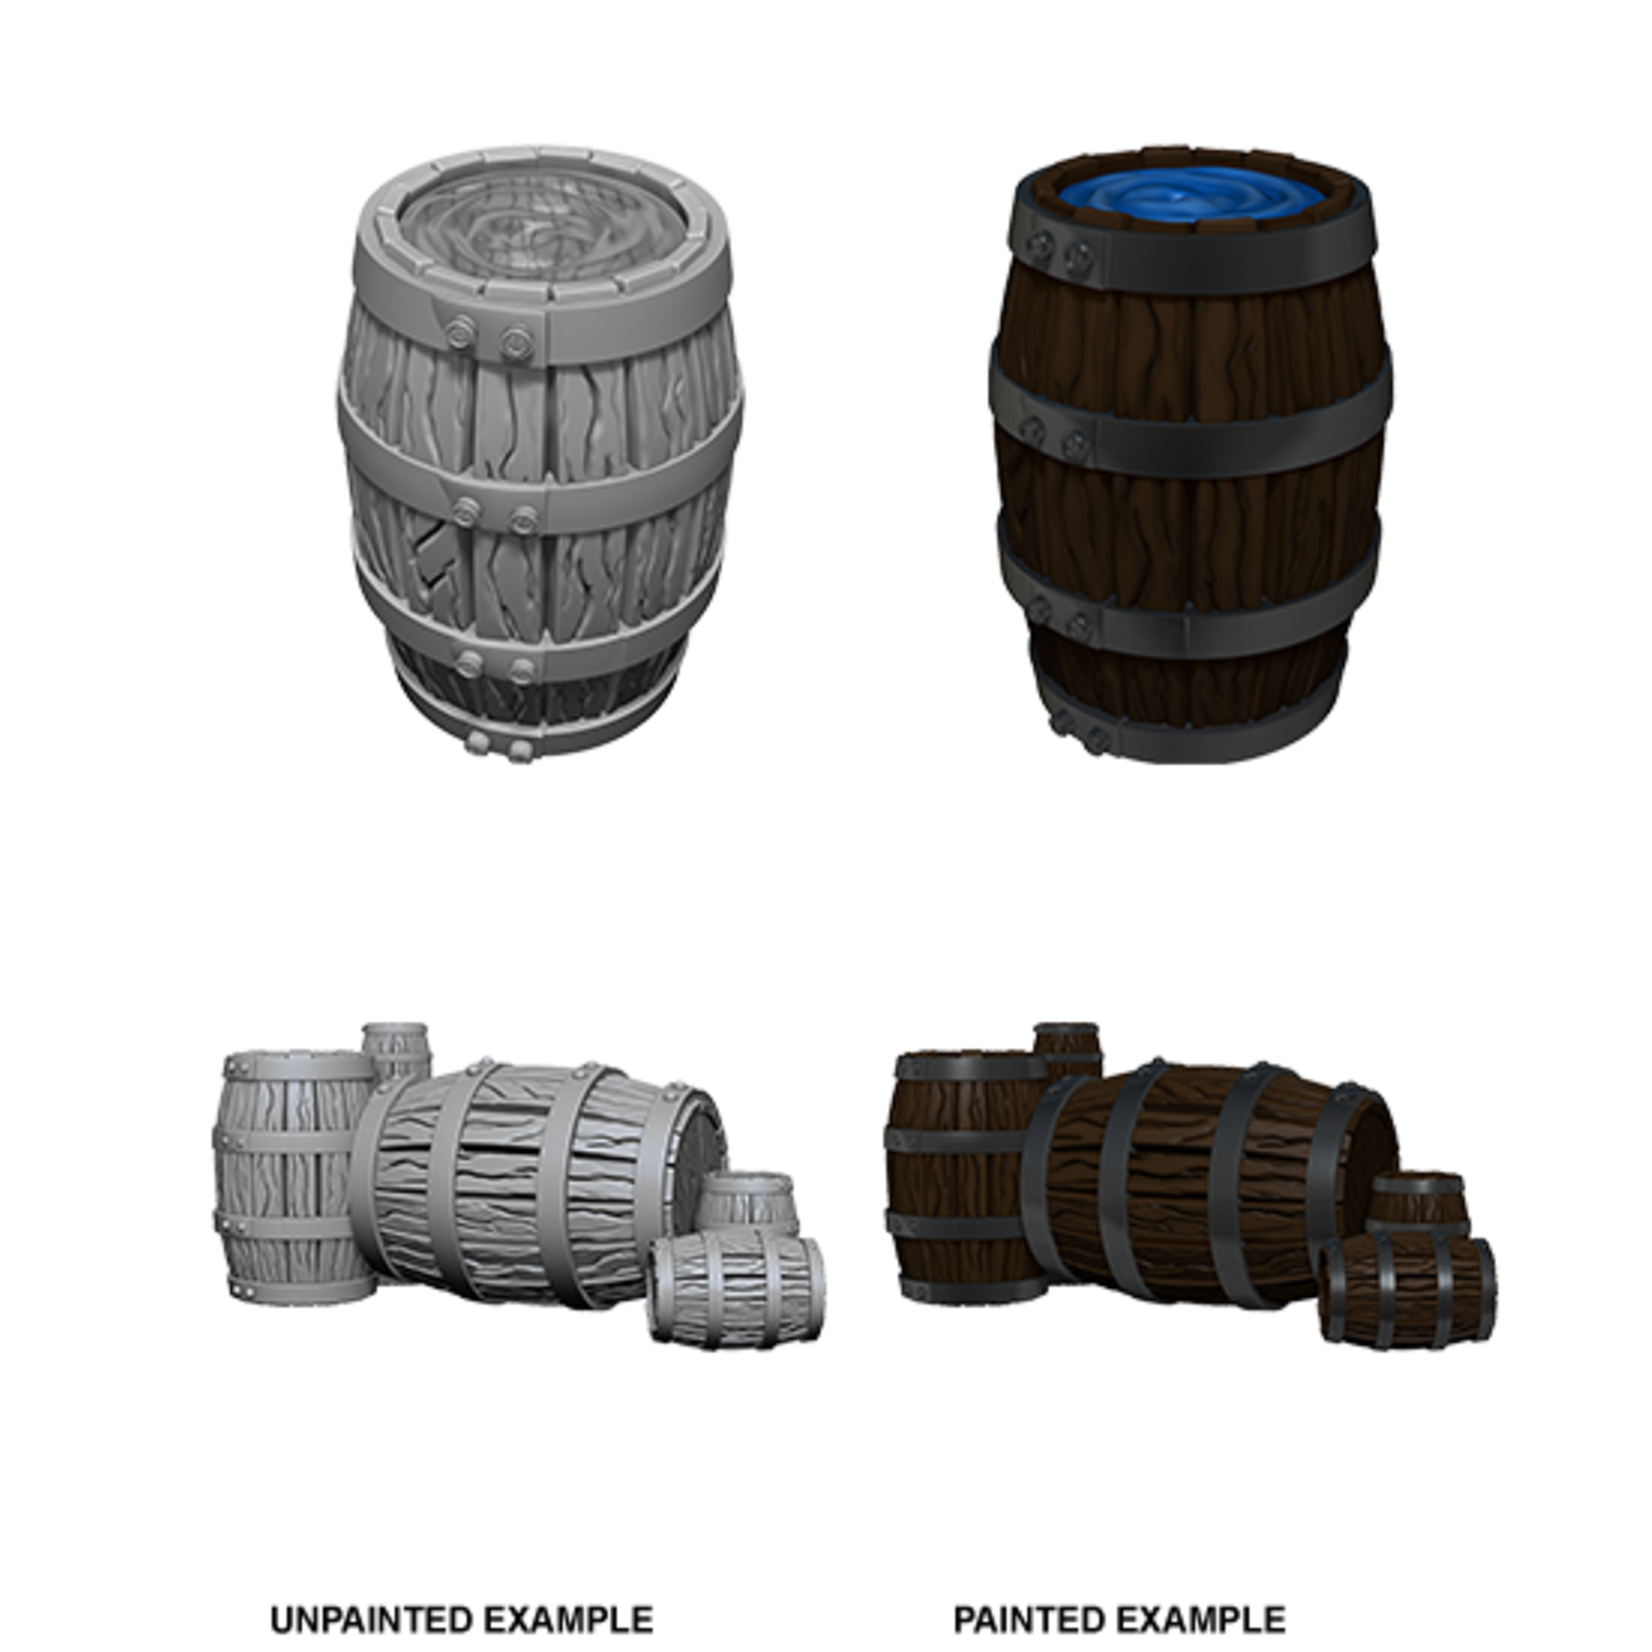 WIZKIDS/NECA Barrel & Pile of Barrels W5